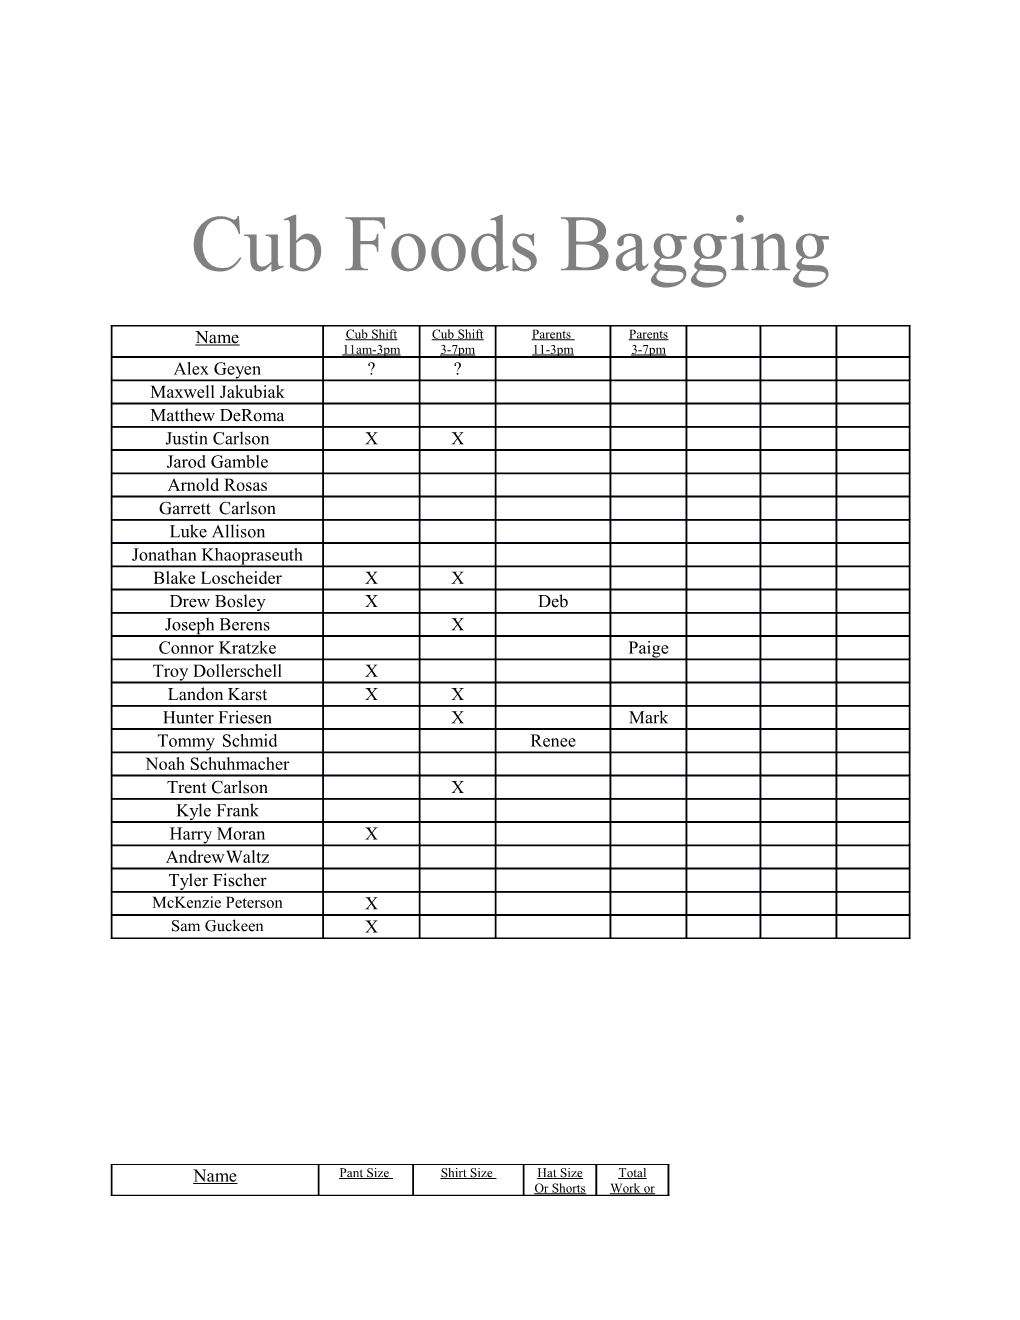 Cub Foods Bagging